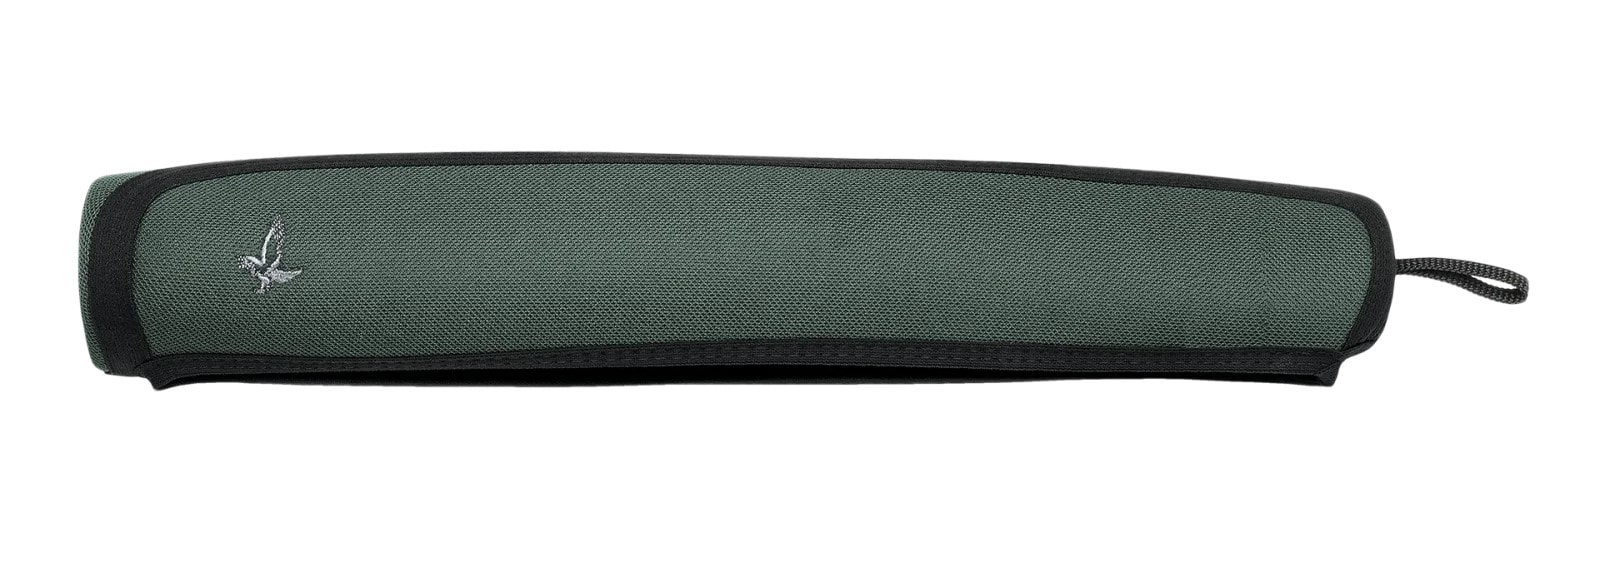 Swarovski Scope Guard L 351-400mm